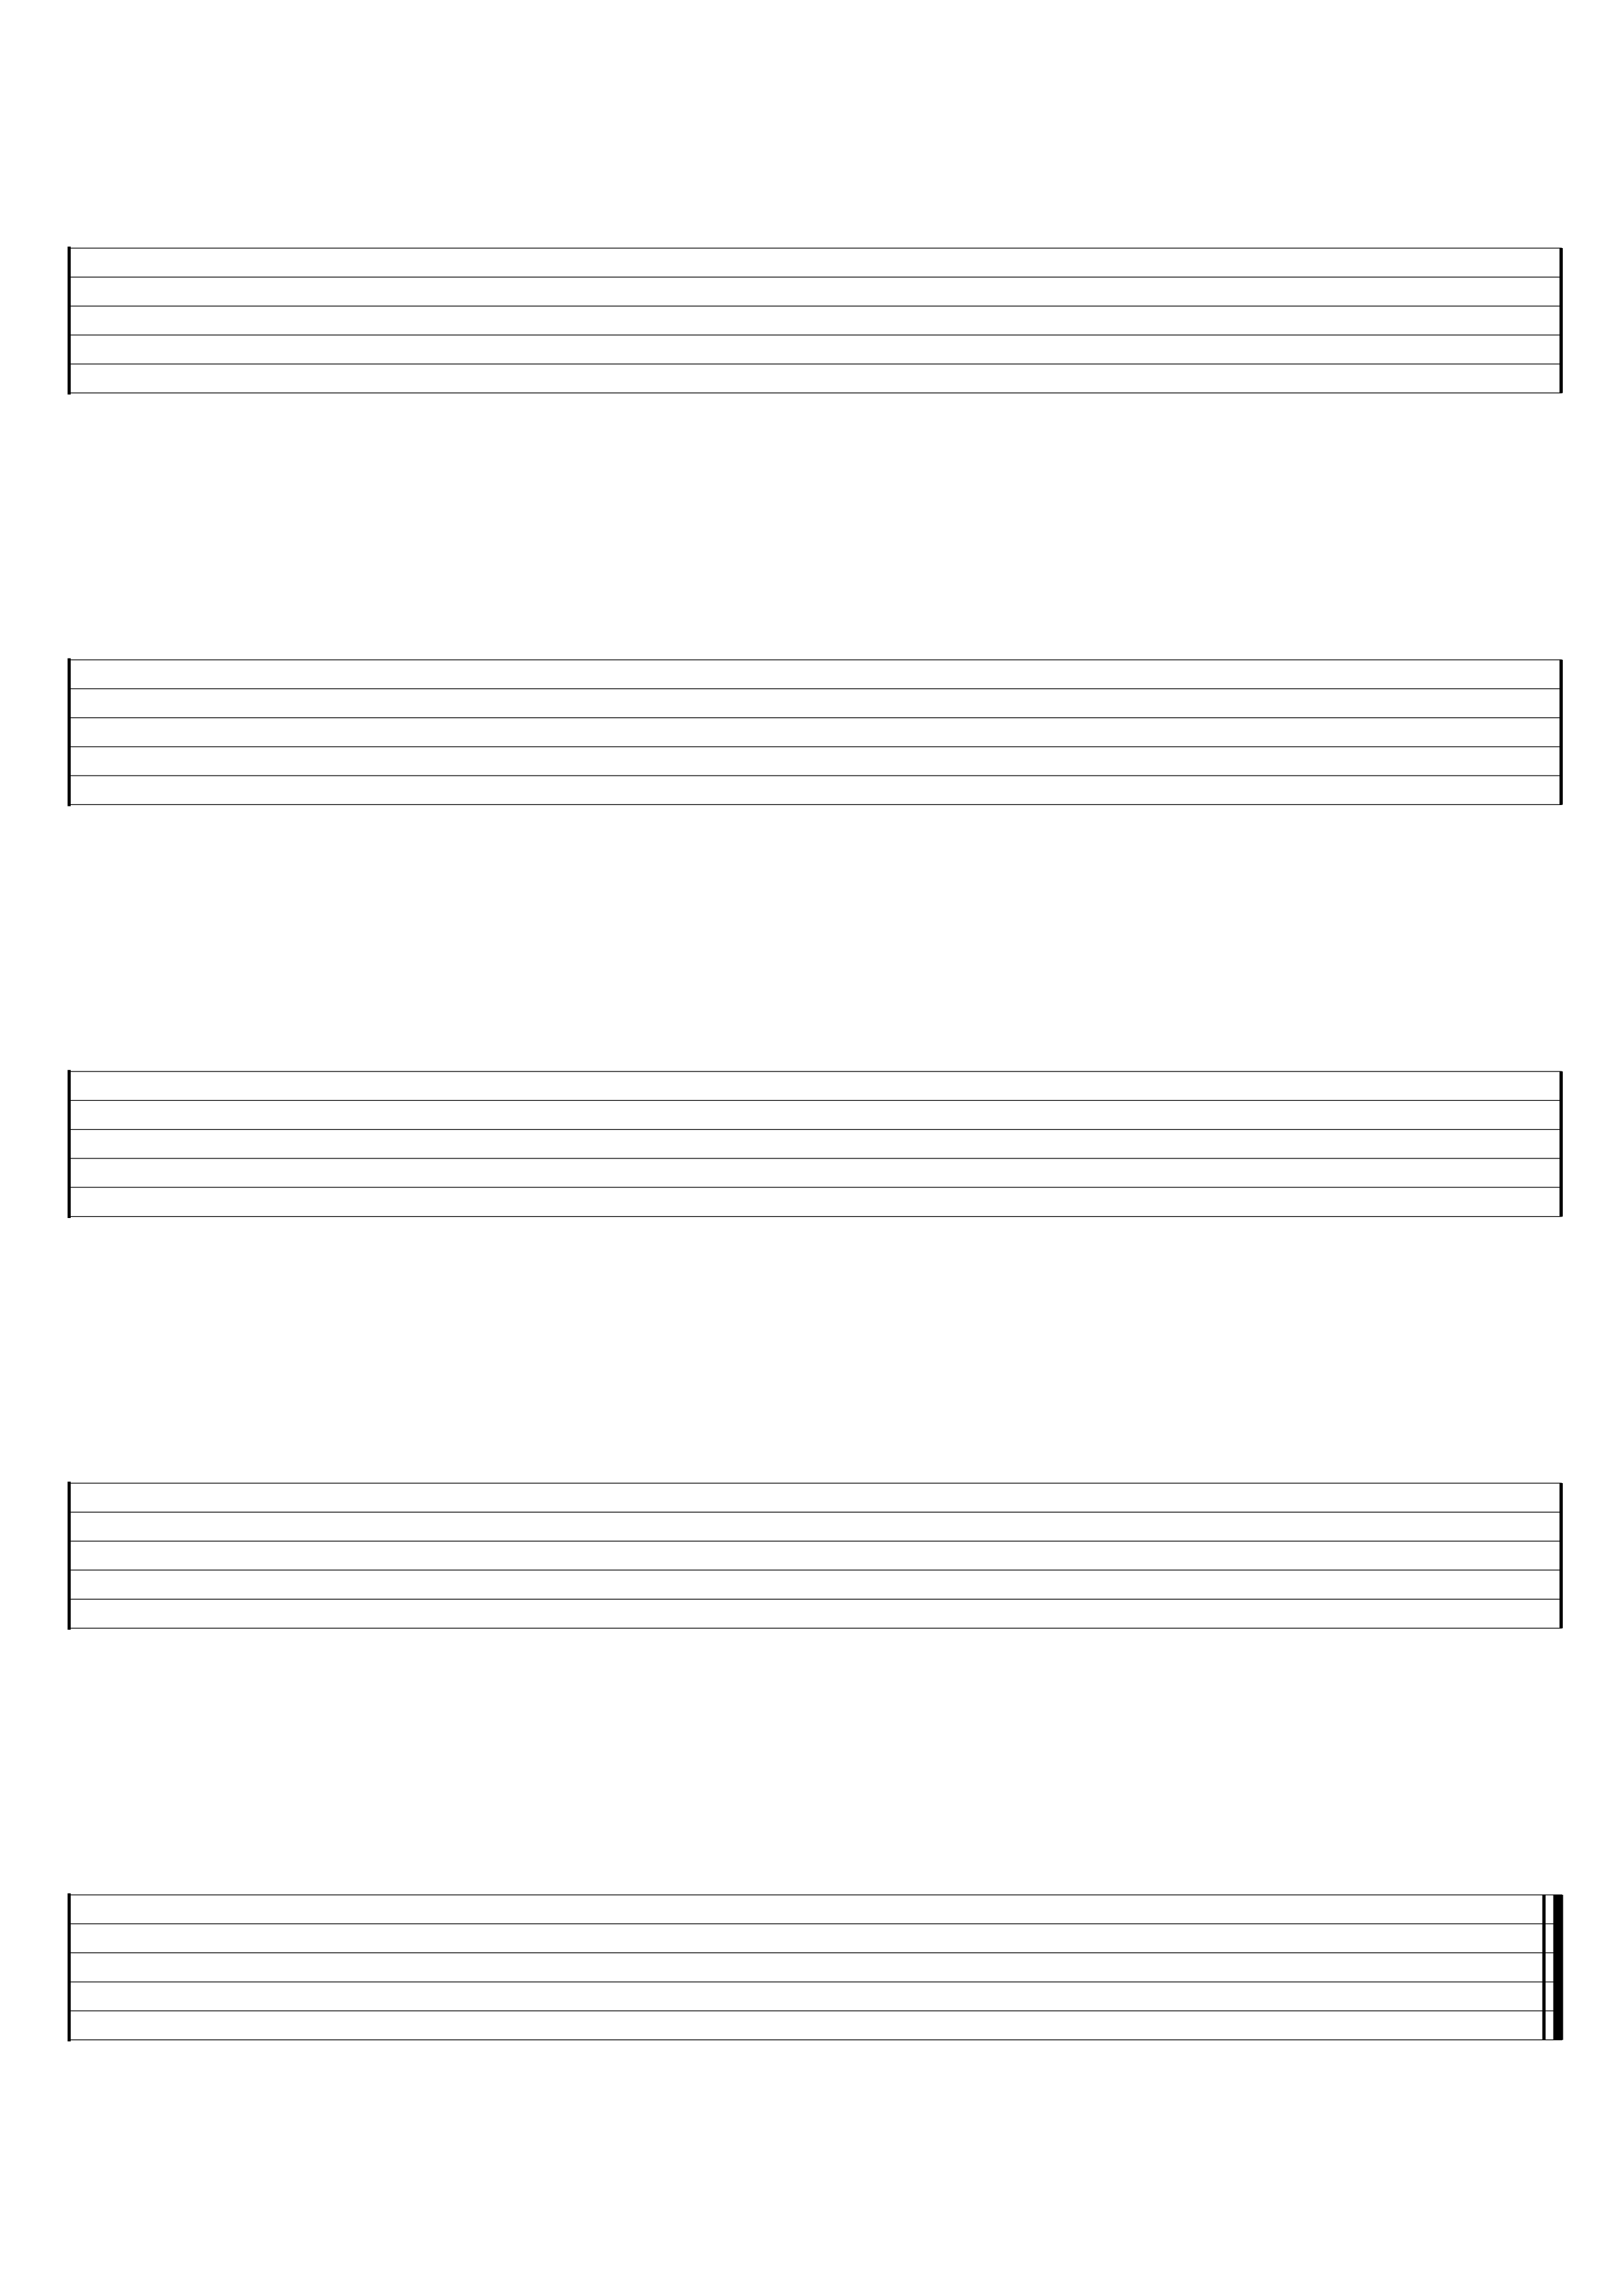 guitar tabs pdf